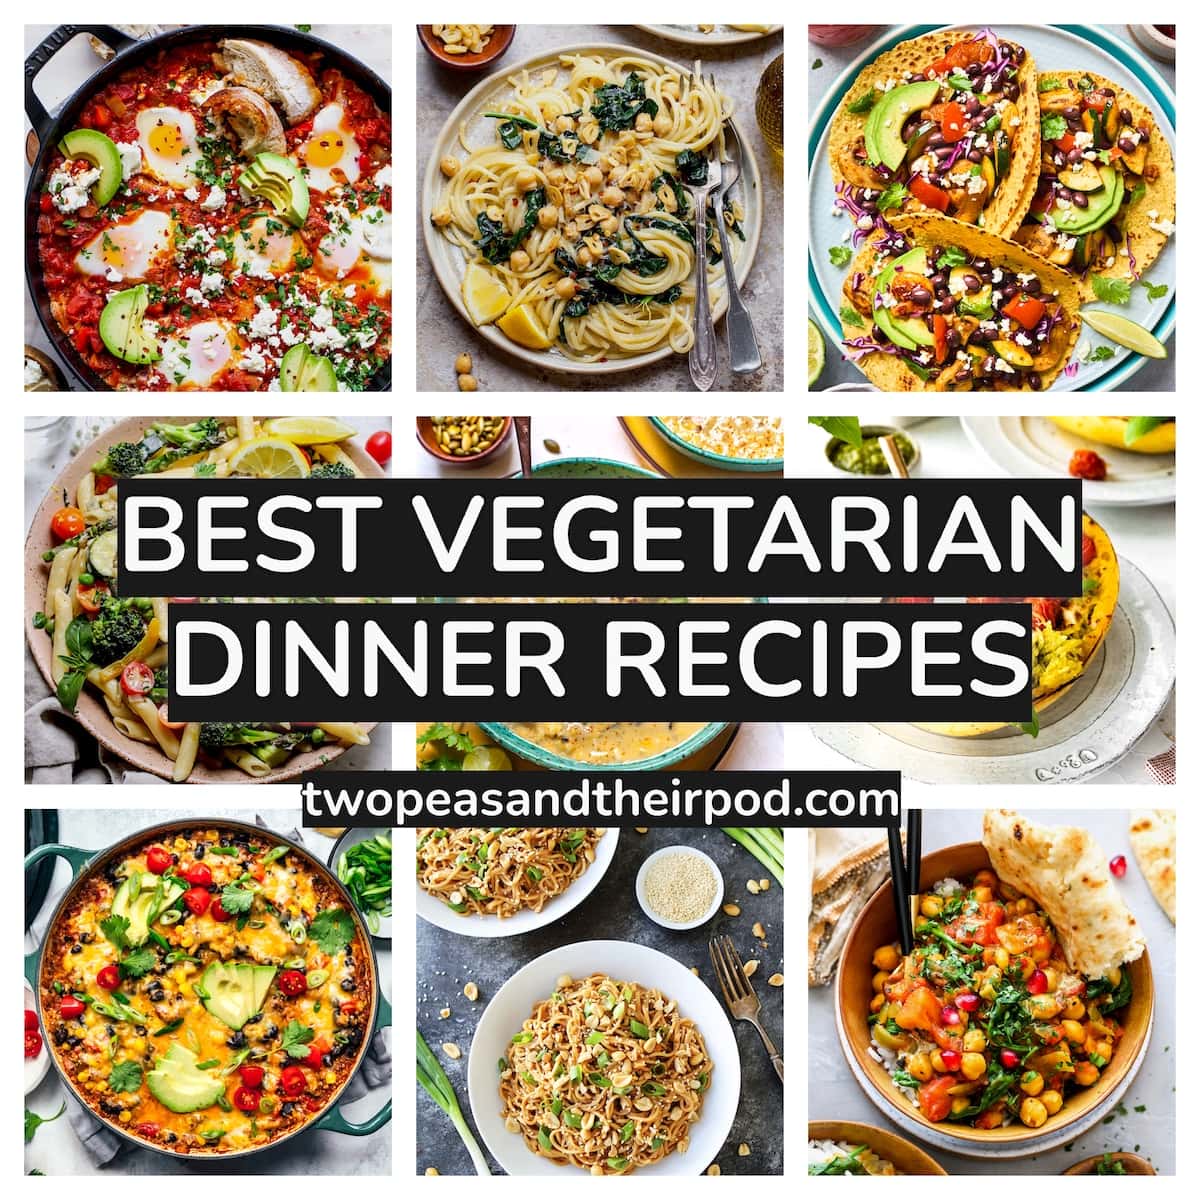 https://www.twopeasandtheirpod.com/wp-content/uploads/2022/01/vegetarian-dinners-collage.jpg